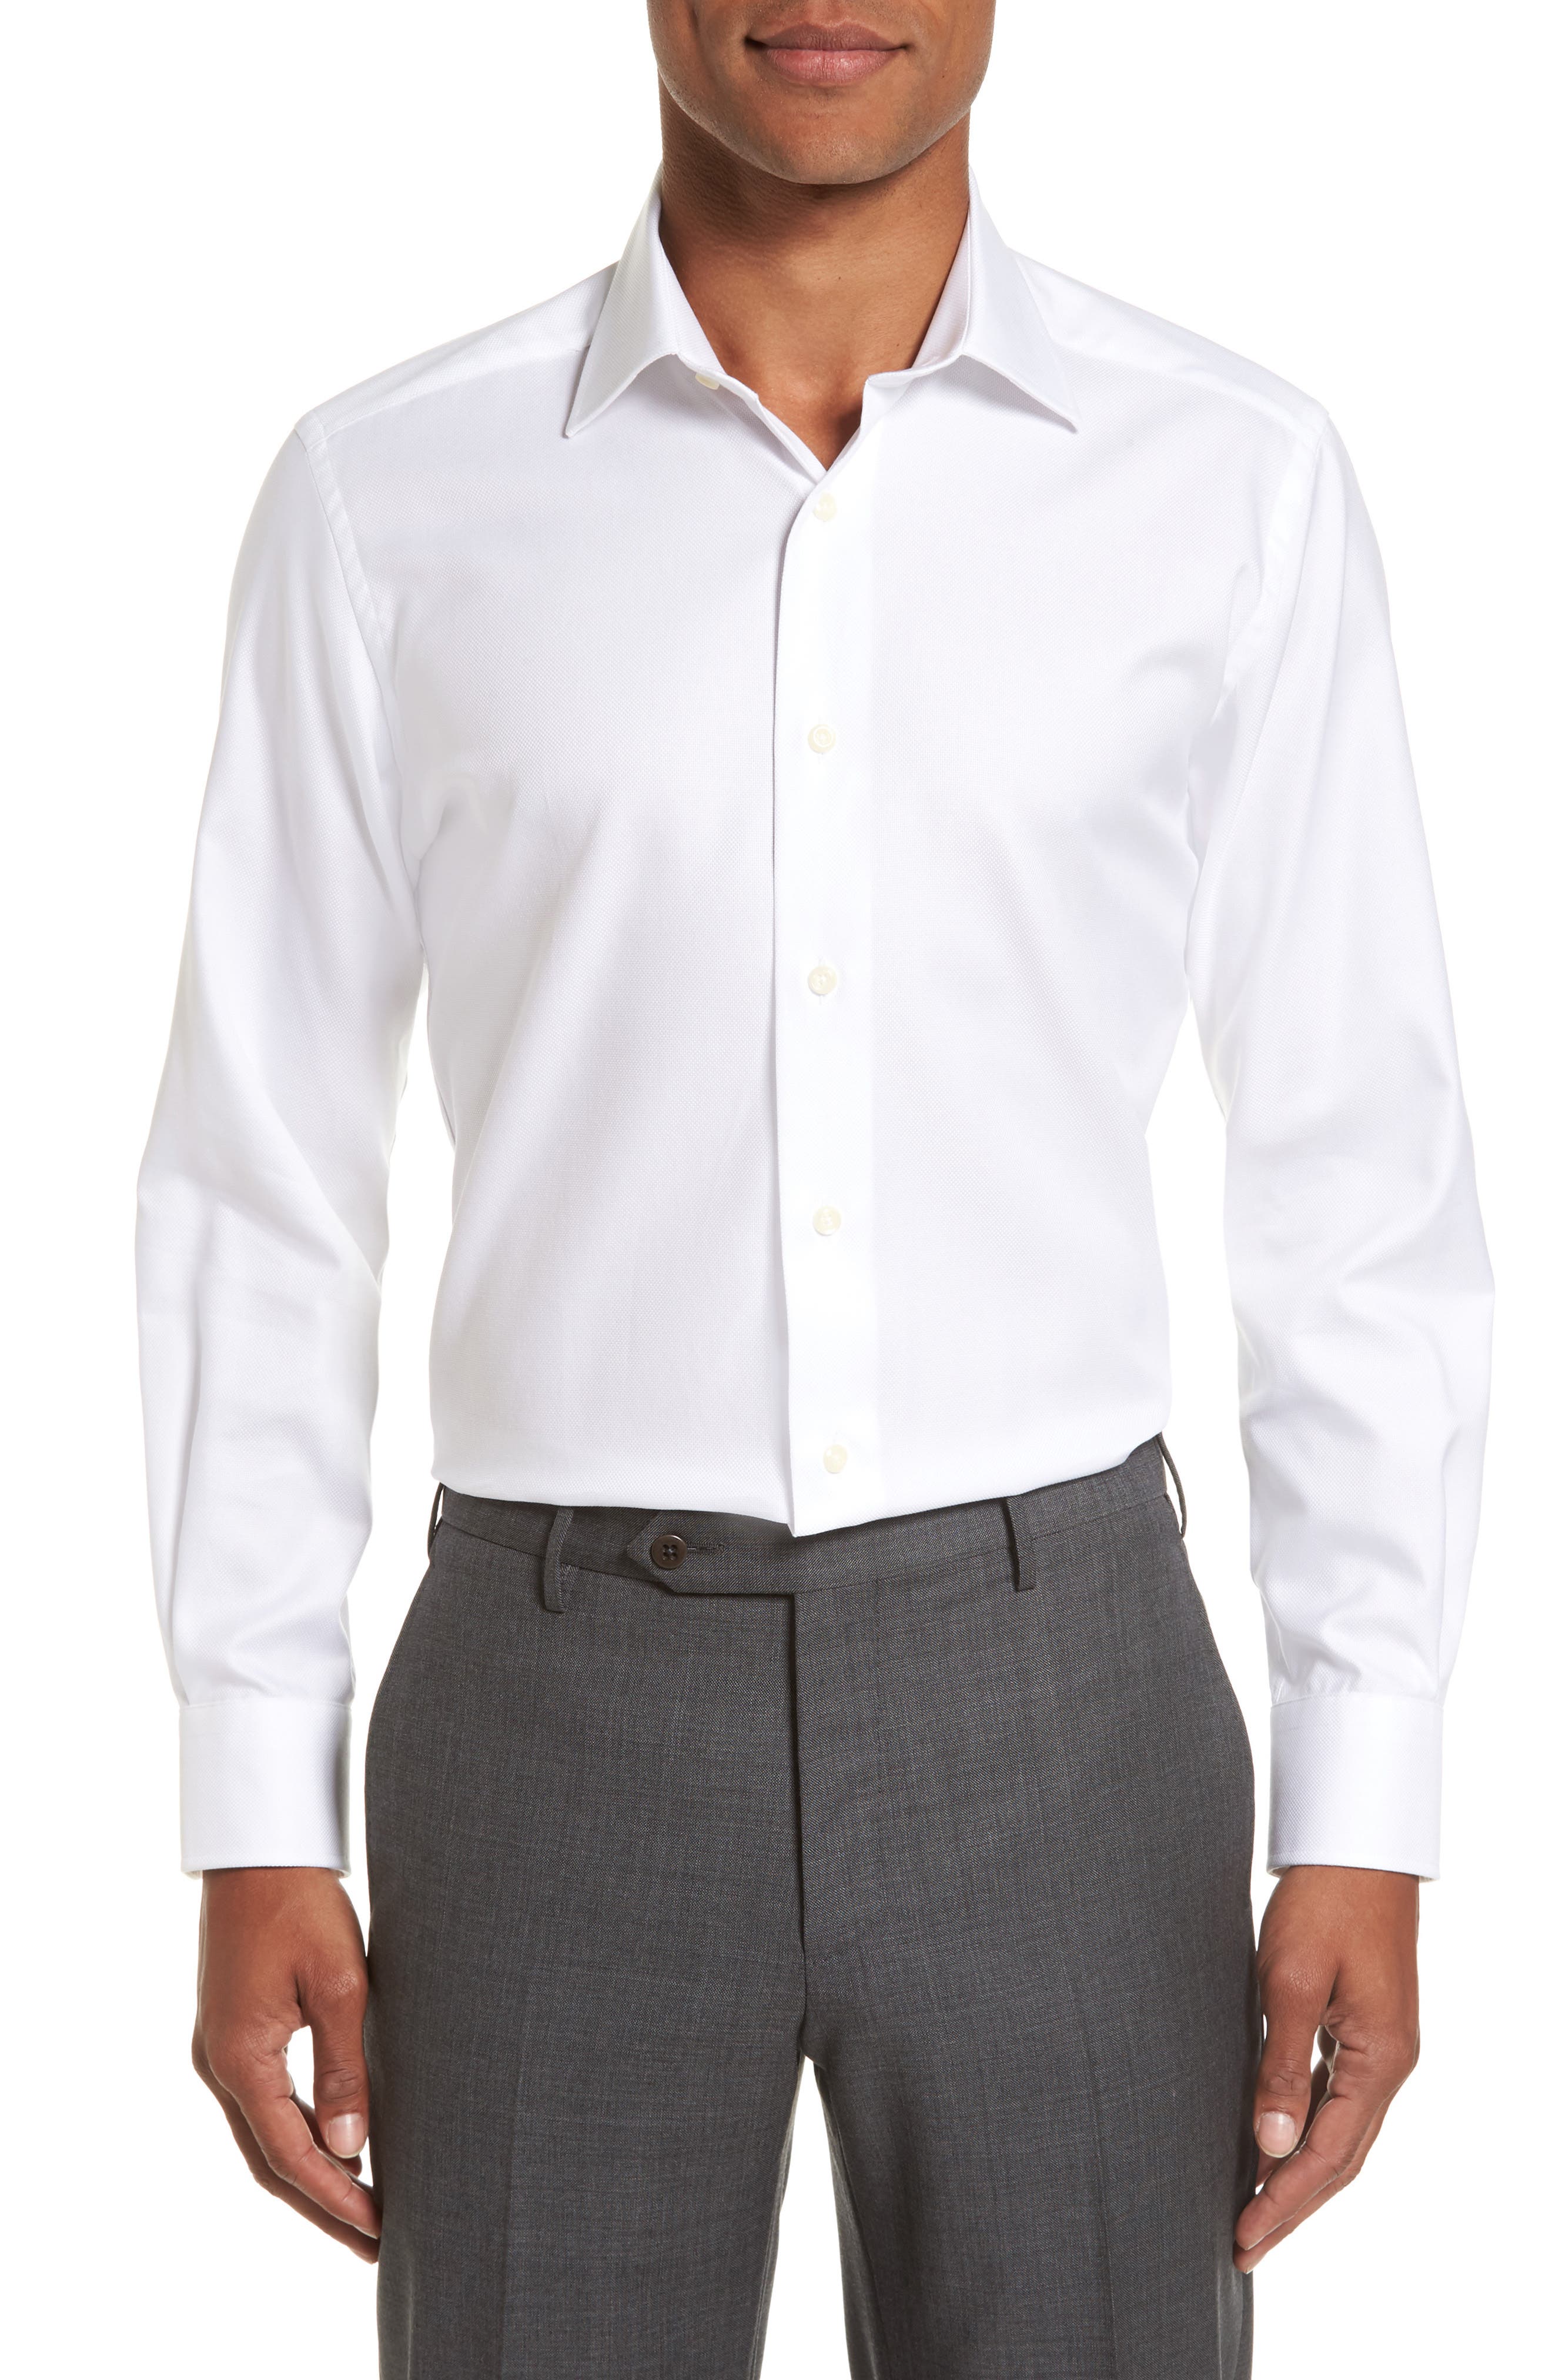 YEZAC Men's Long Sleeve Cotton Dress Shirt Solid Slim fit Business Casual Shirts Comfortable Wrinkle Resistant 